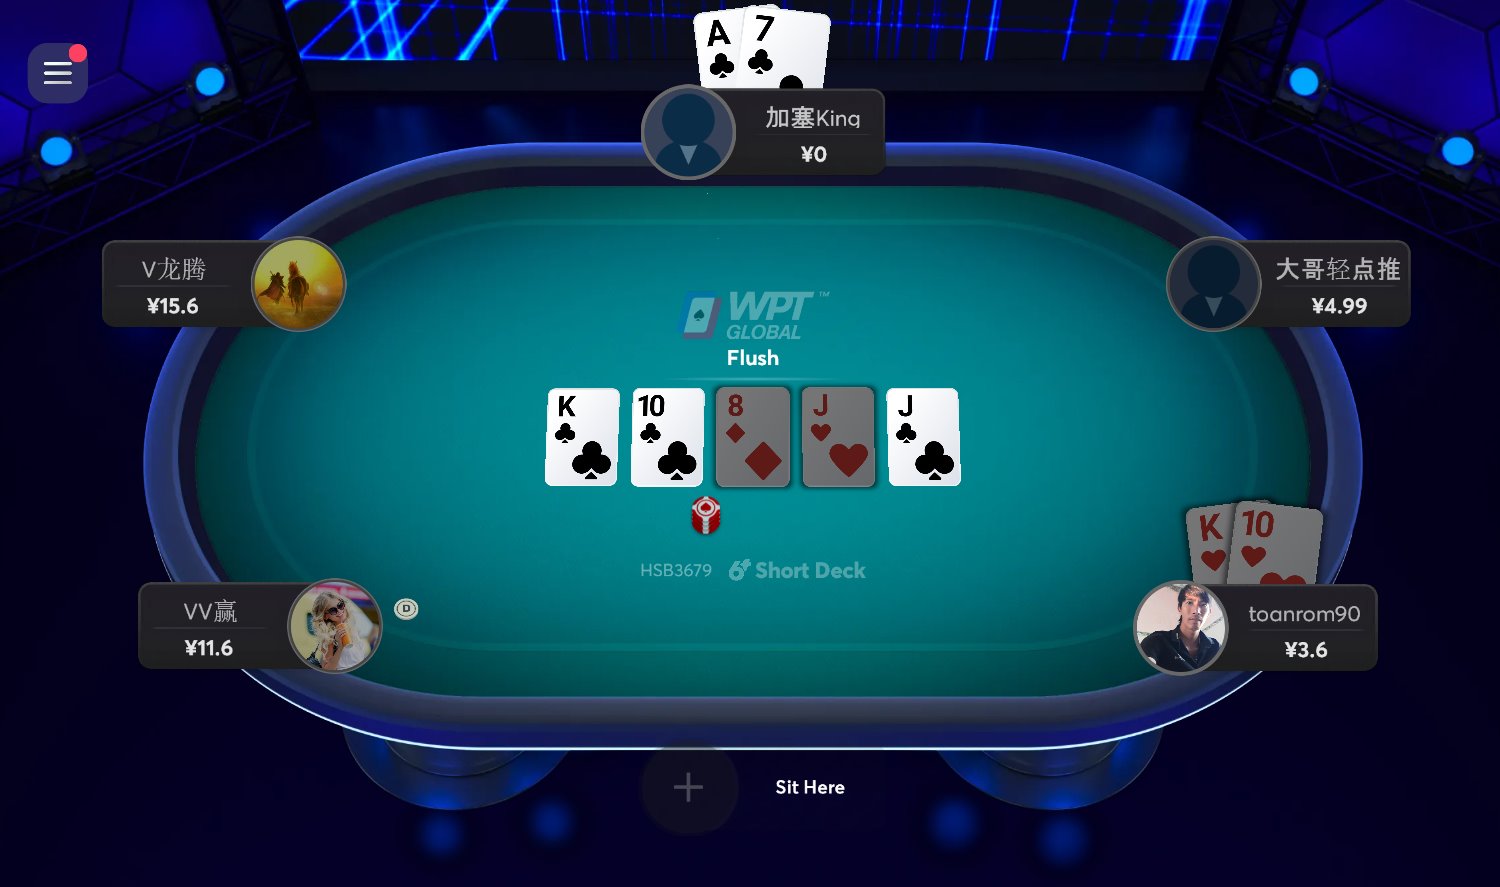 wpt global - Ruang poker online baru